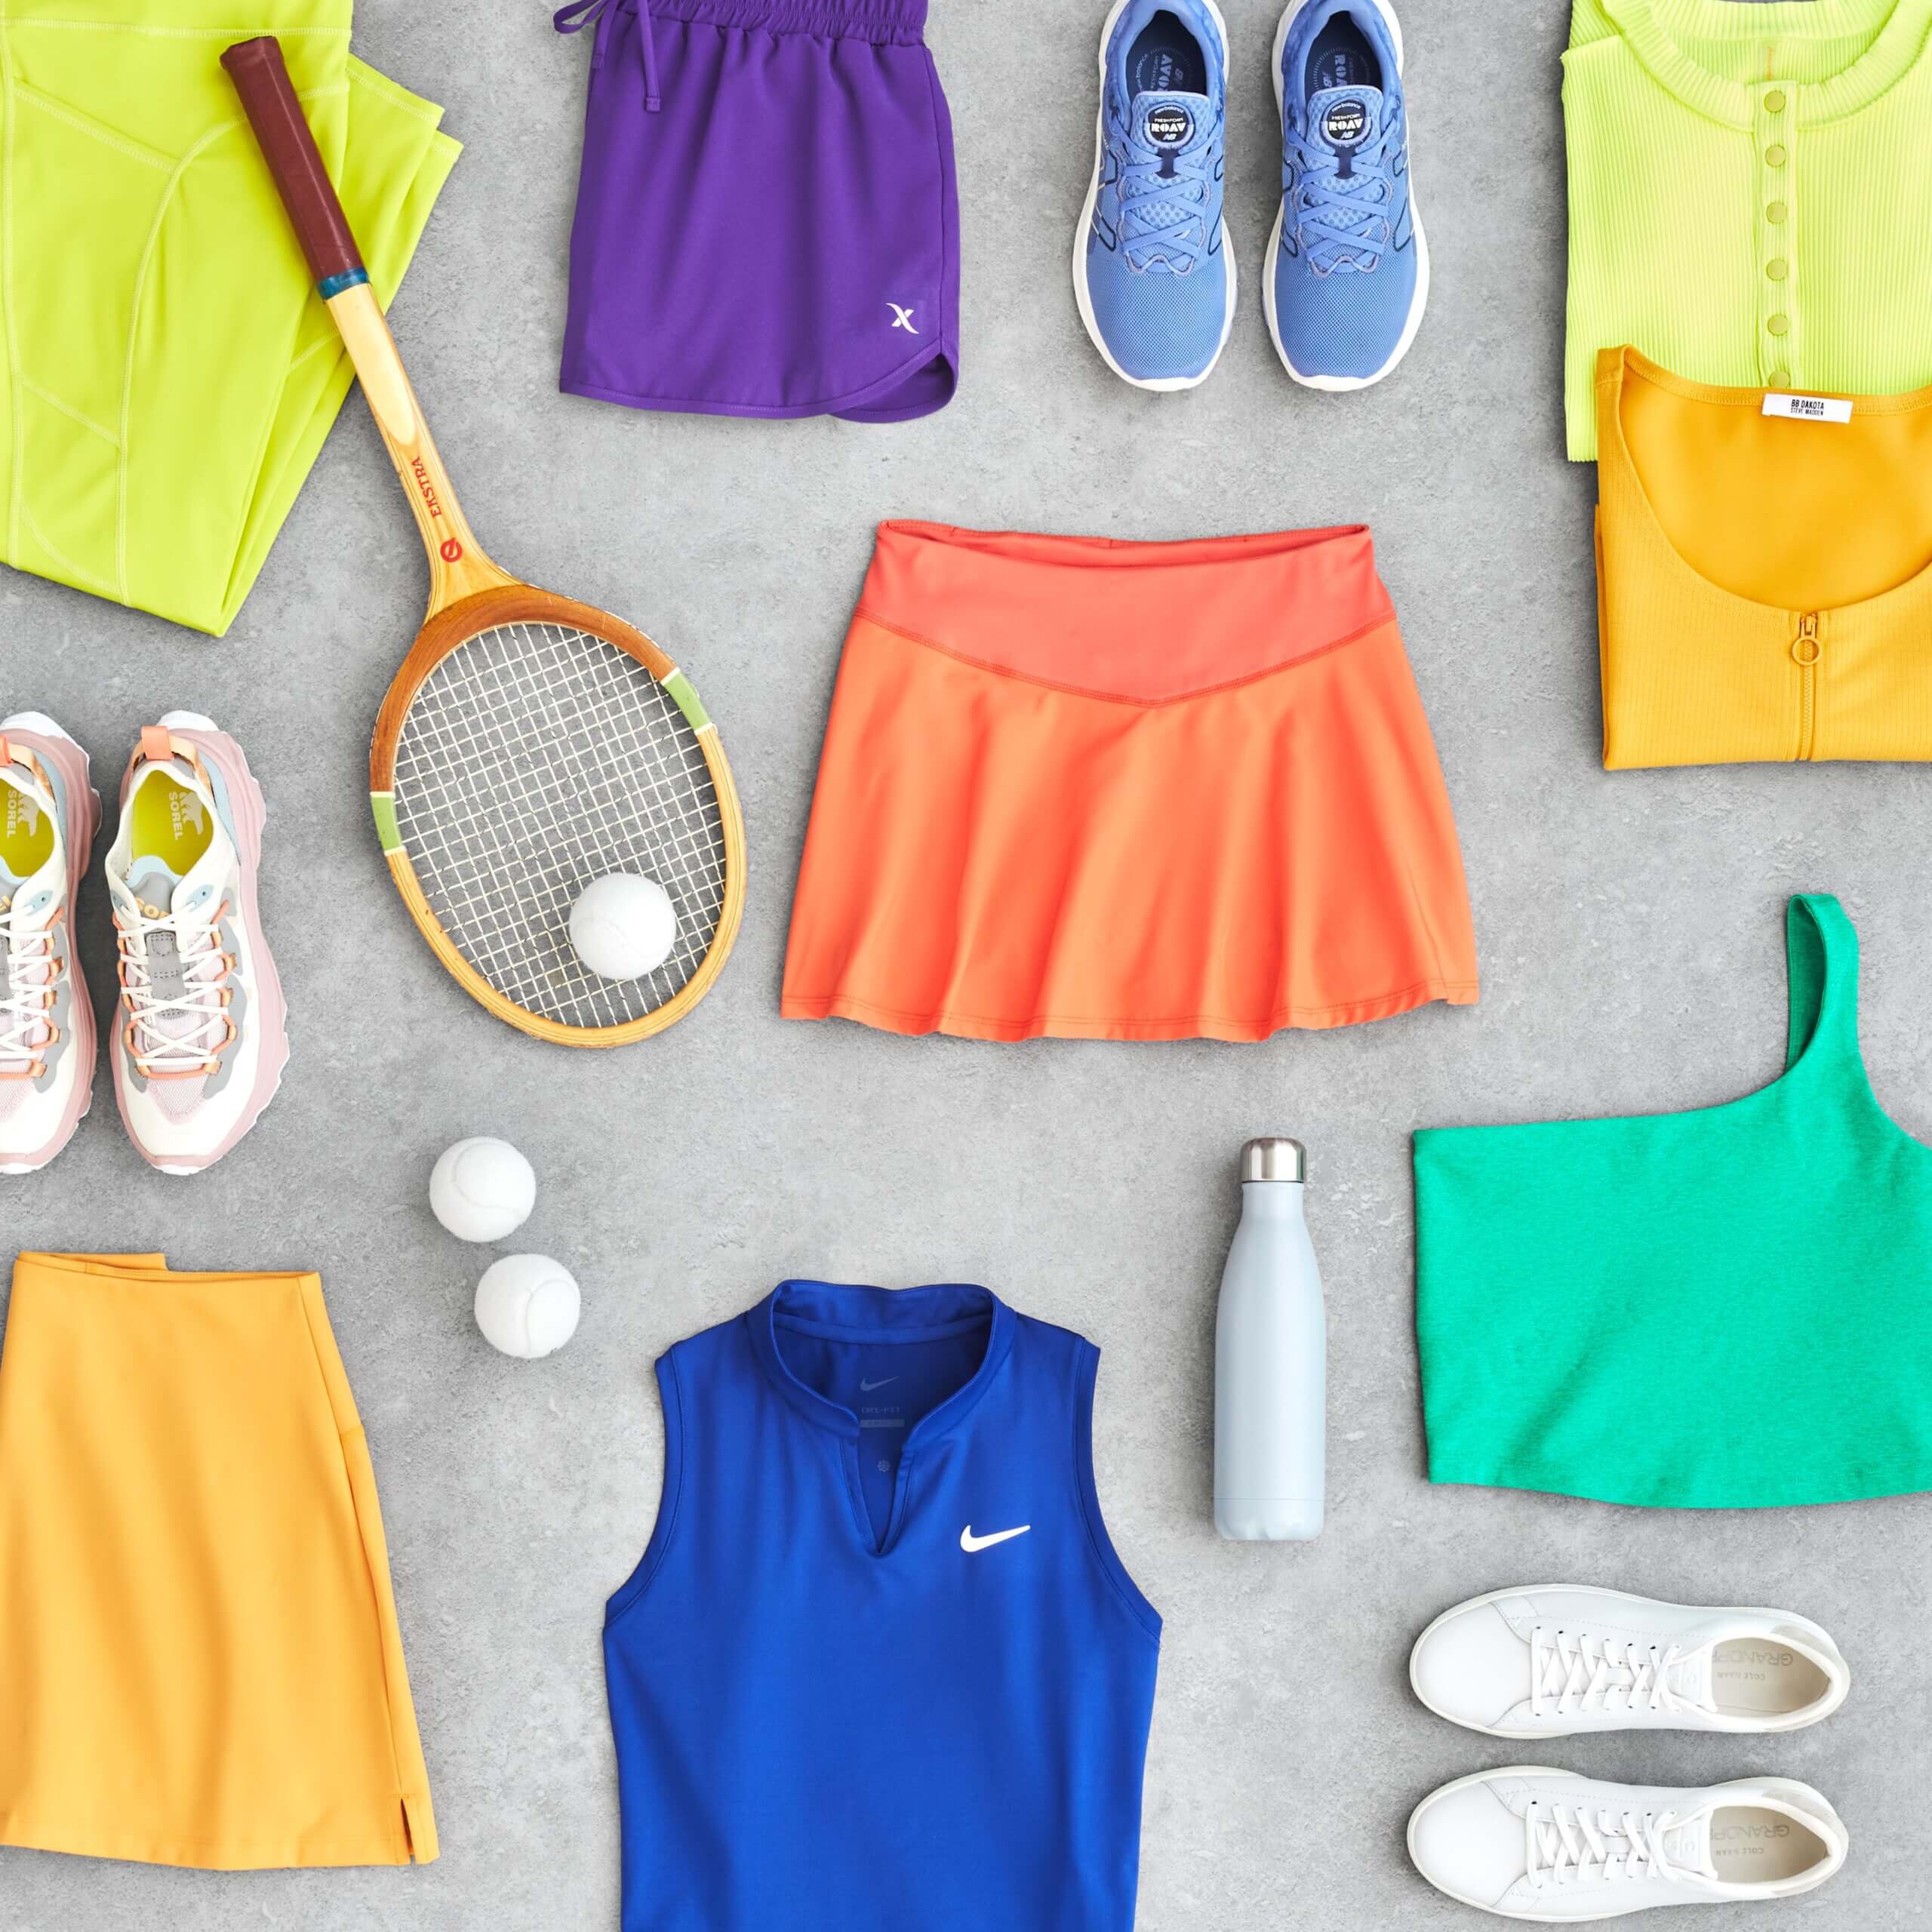  Women's Tennis Clothing - Werena / Women's Tennis Clothing /  Tennis Clothing: Clothing, Shoes & Jewelry